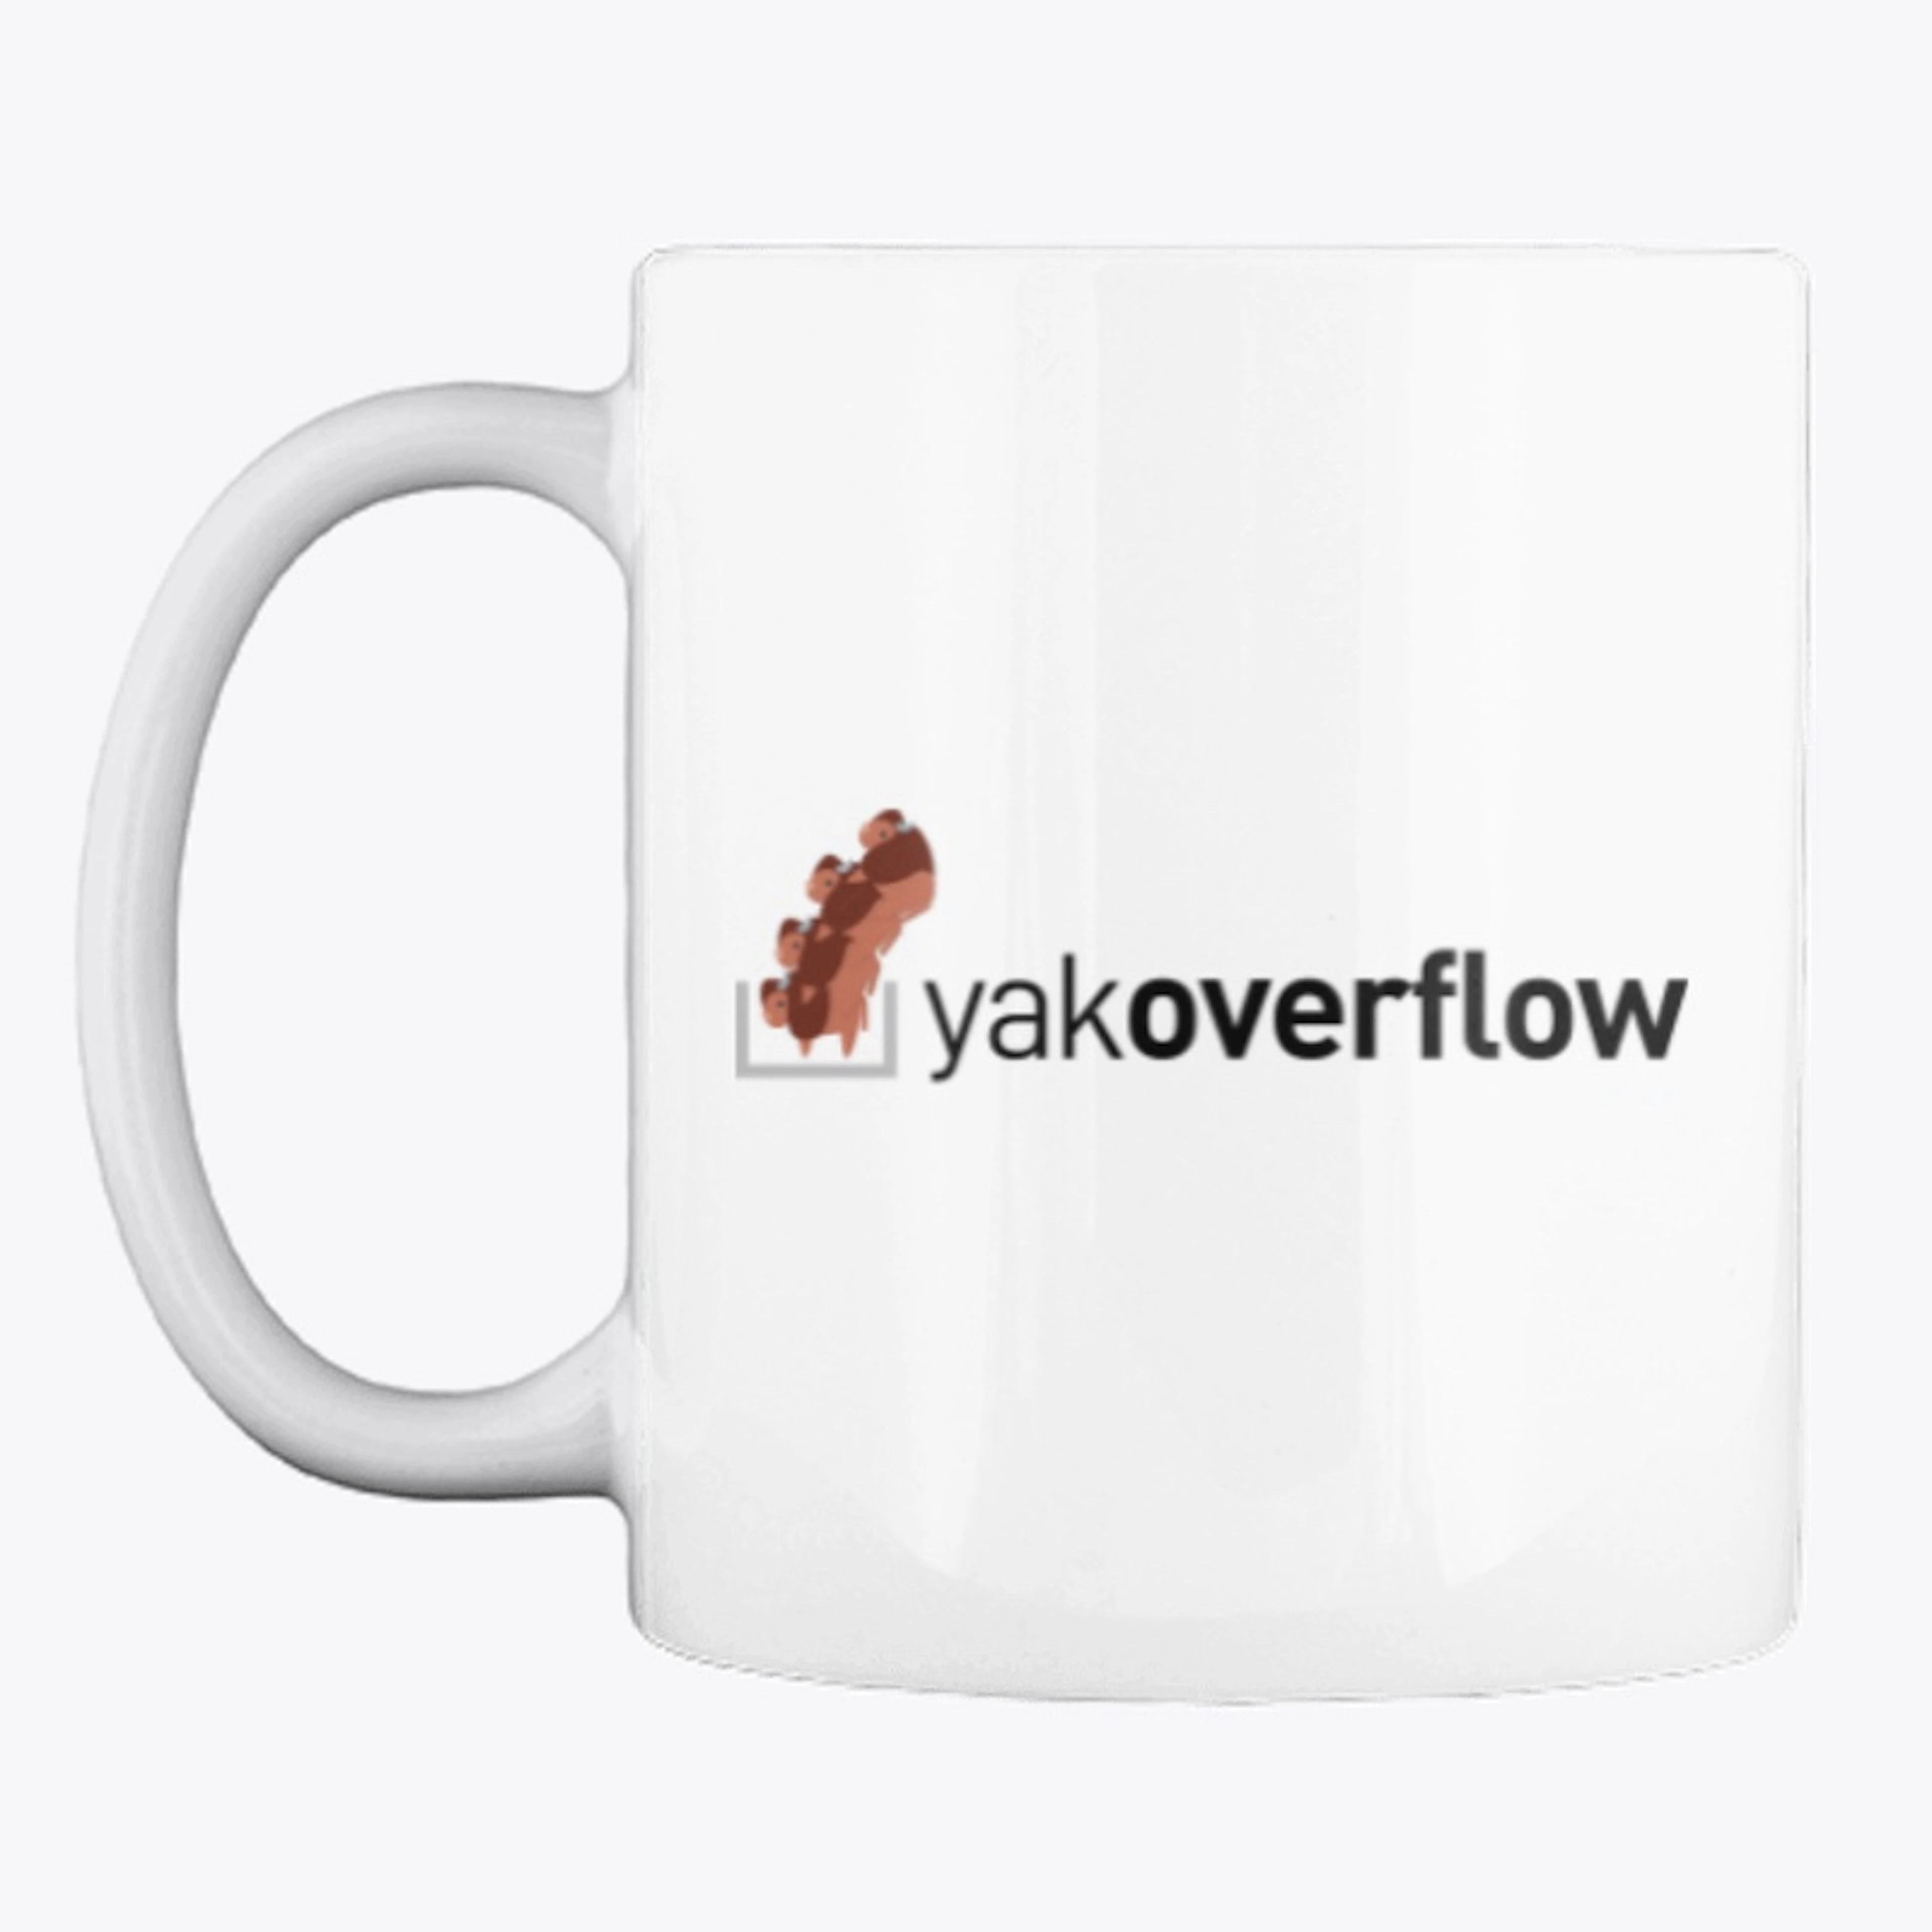 yak overflow